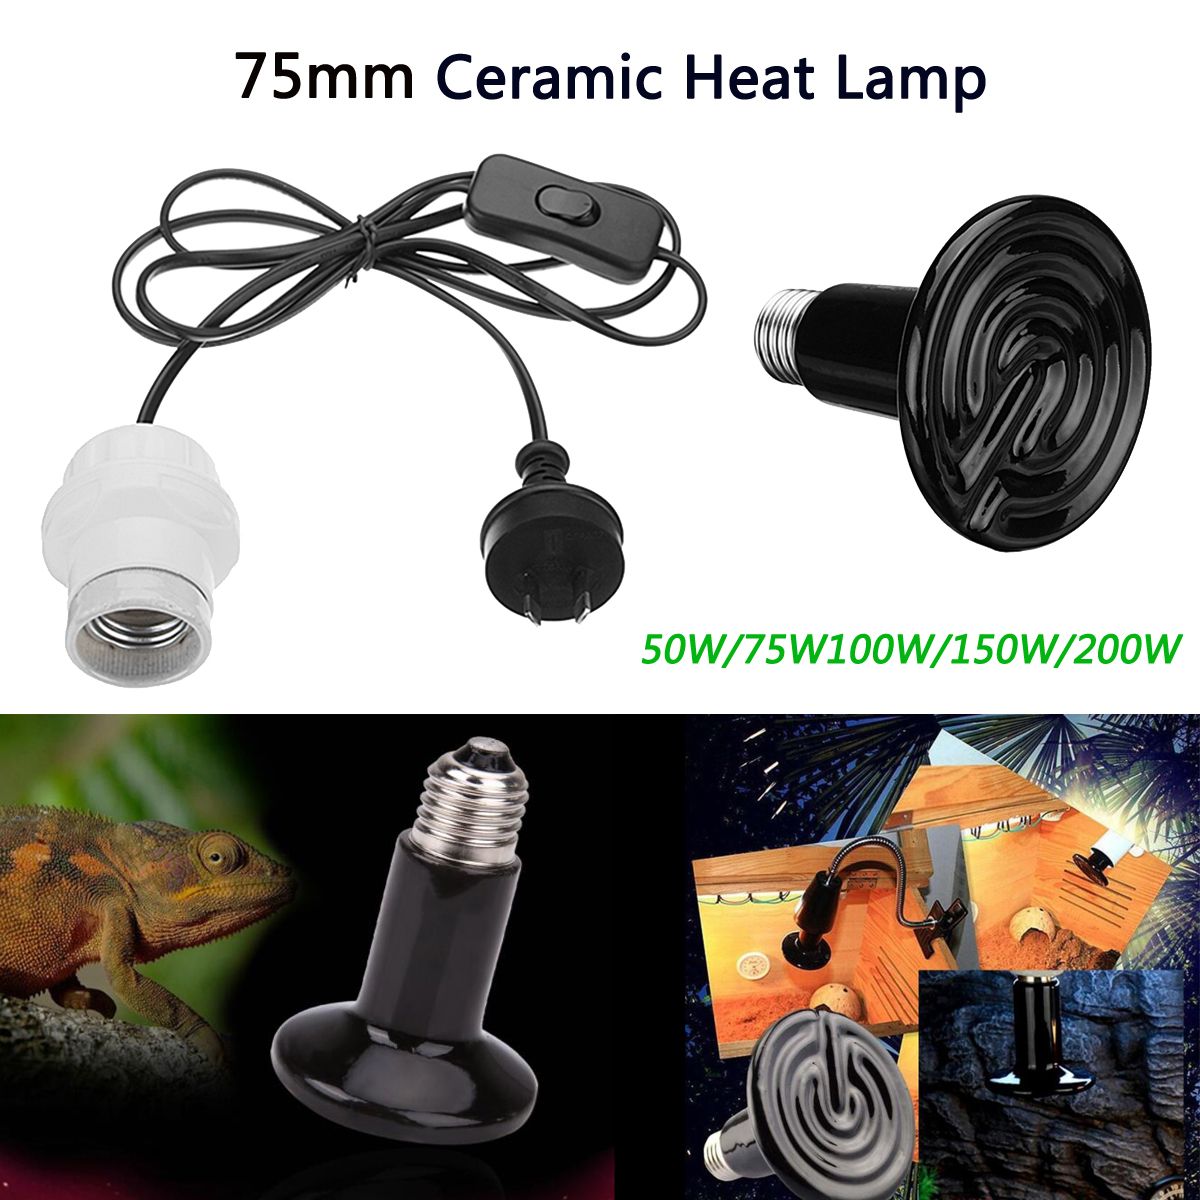 E27-50W-75W-100W-150W-200W-Ceramic-Heat-Emitter-Lampholder-Bulb-Adapter-for-Reptile-Pet-AC220V-1276403